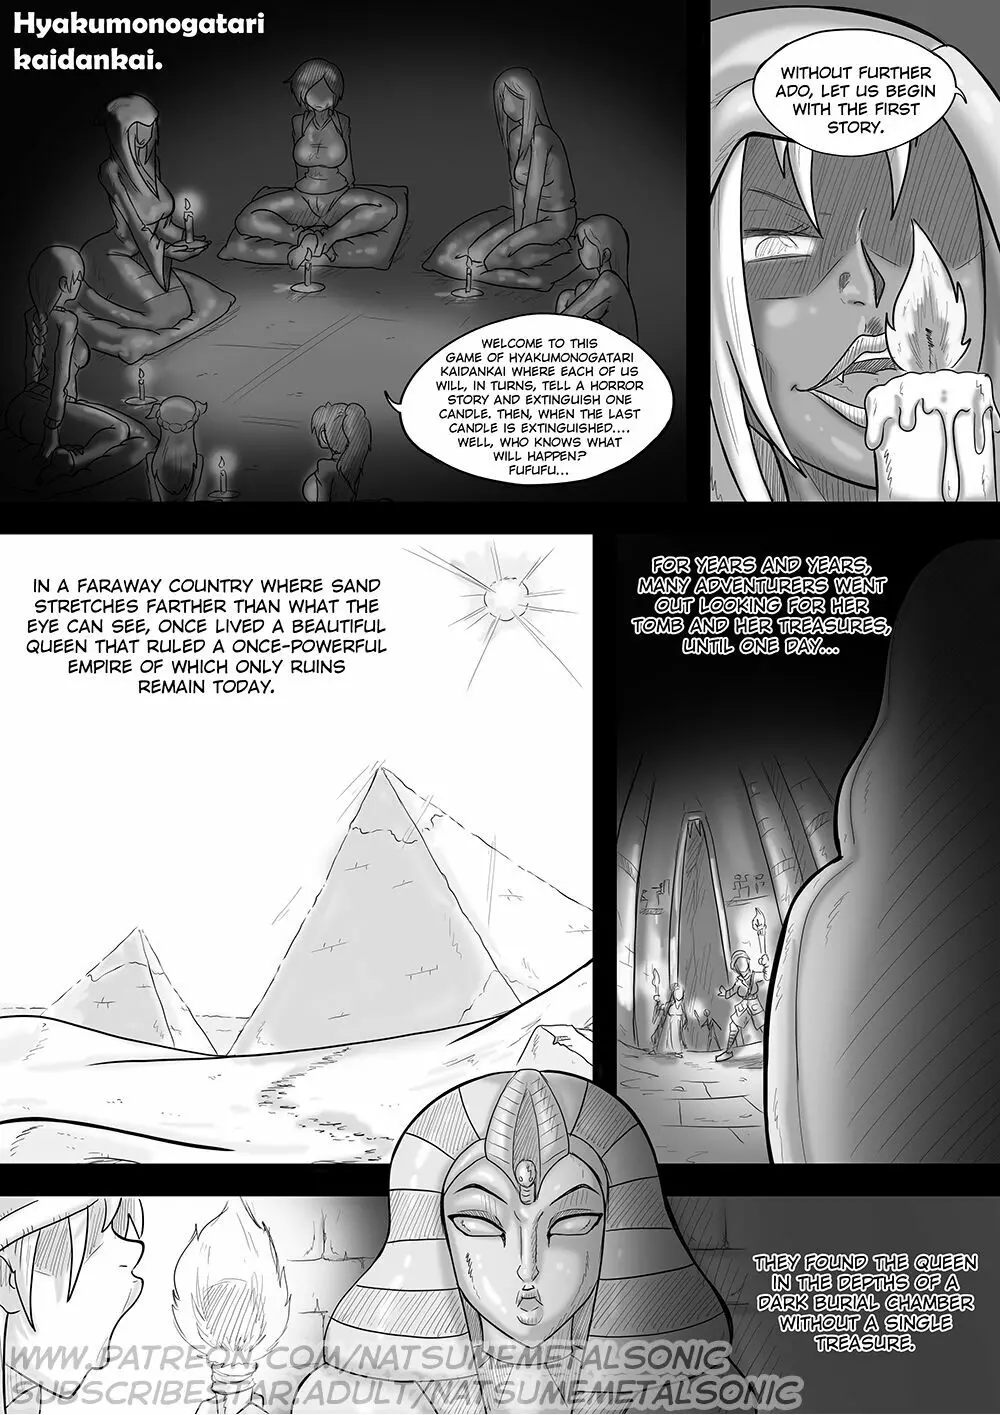 Halloween Vore Stories. - page1